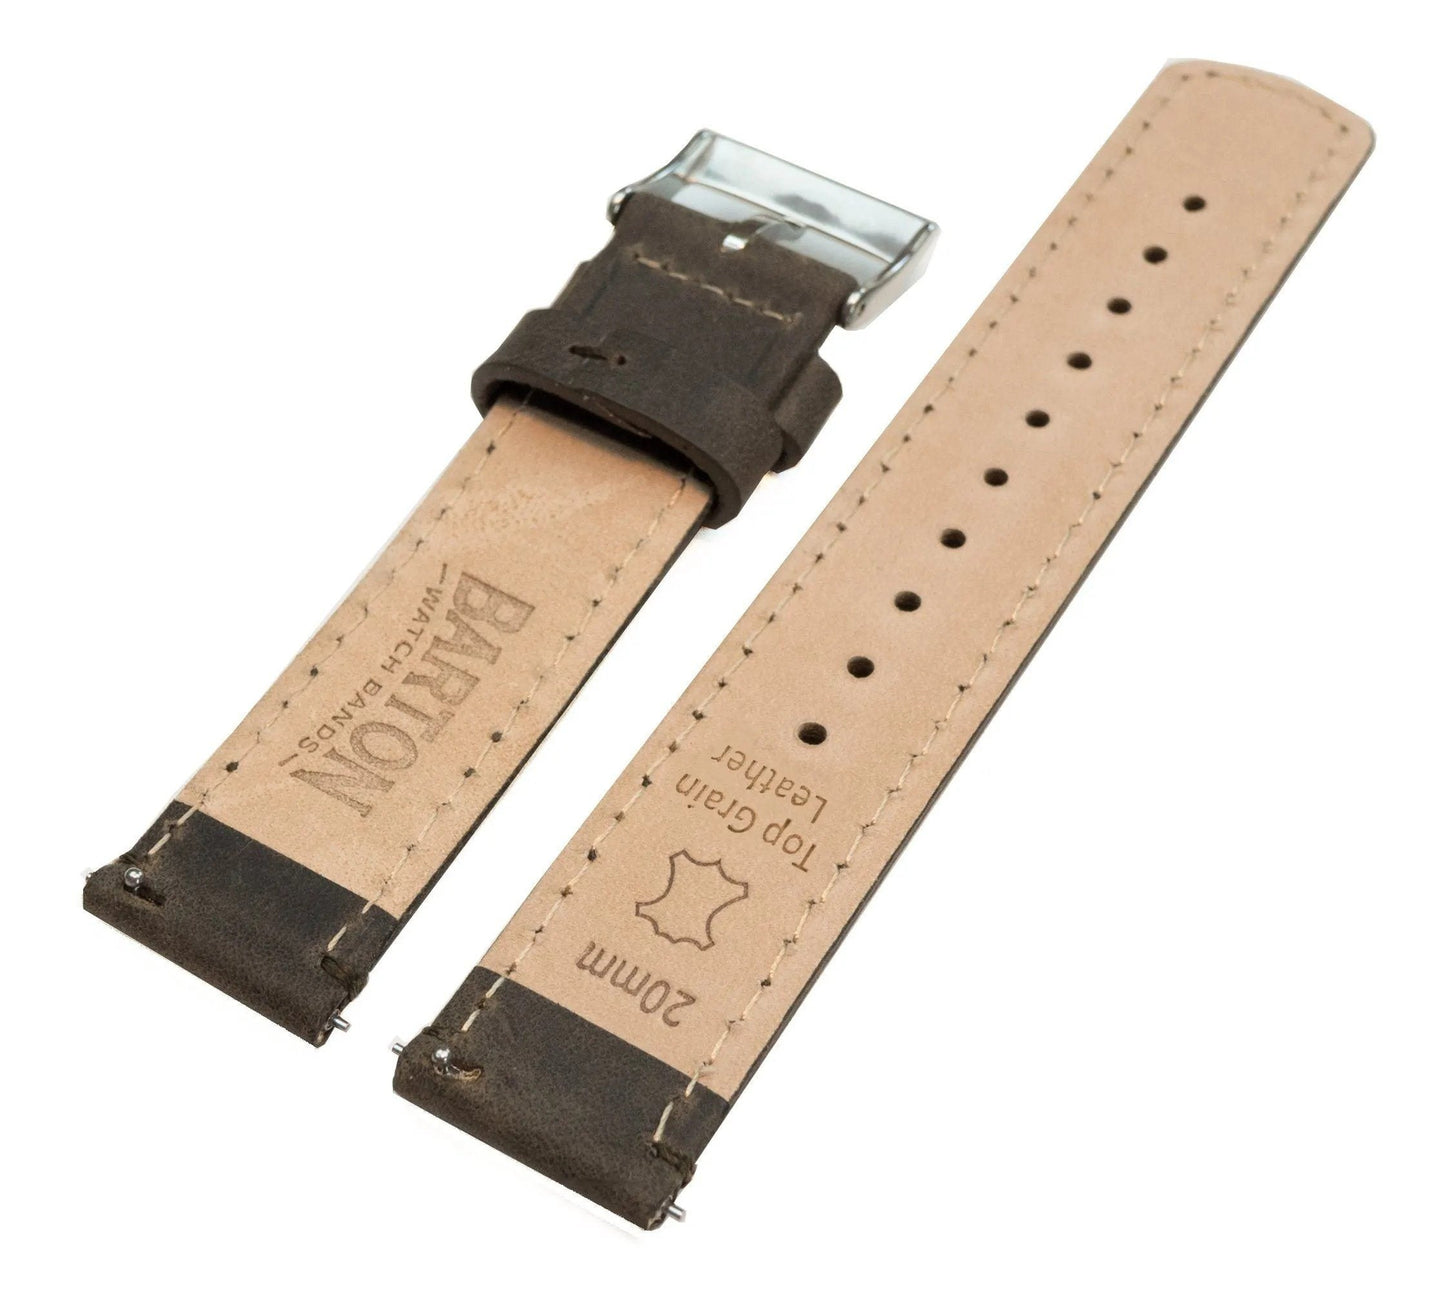 MOONSWATCH Bip | Espresso Brown Leather & Stitching - Barton Watch Bands